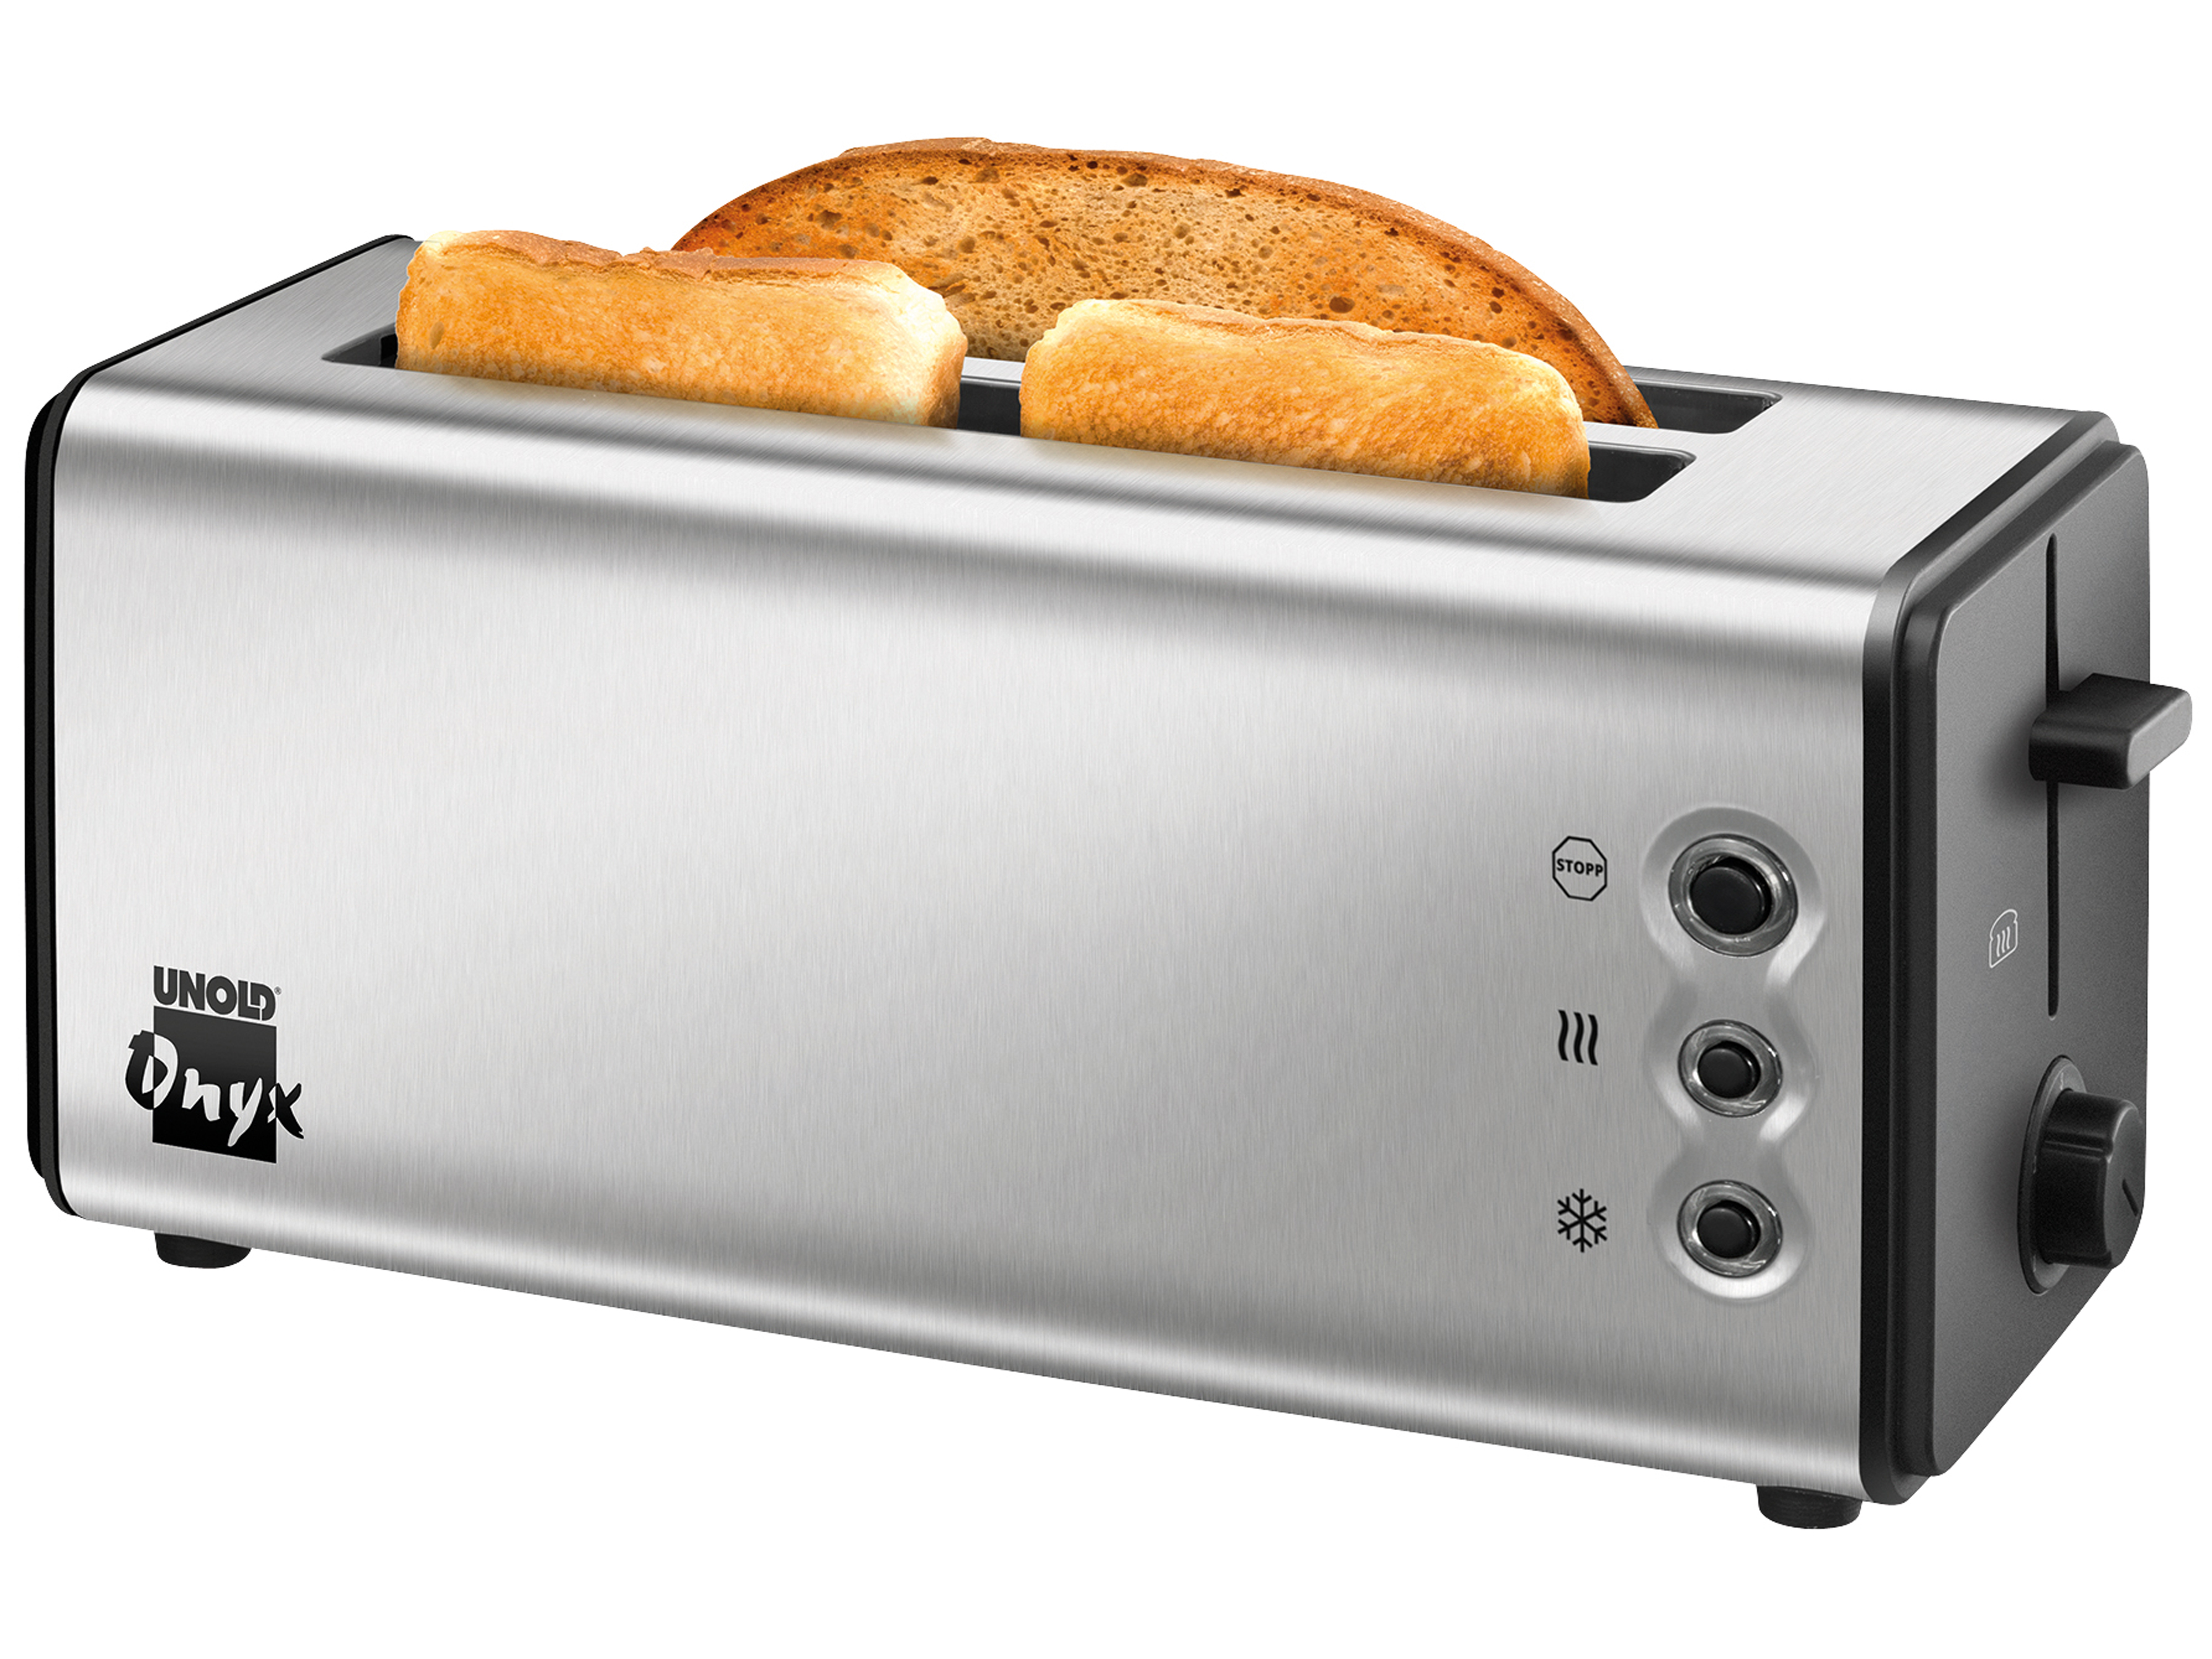 UNOLD Langschlitz-Toaster Onyx Duplex 38915, 1400 W, Edelstahl 